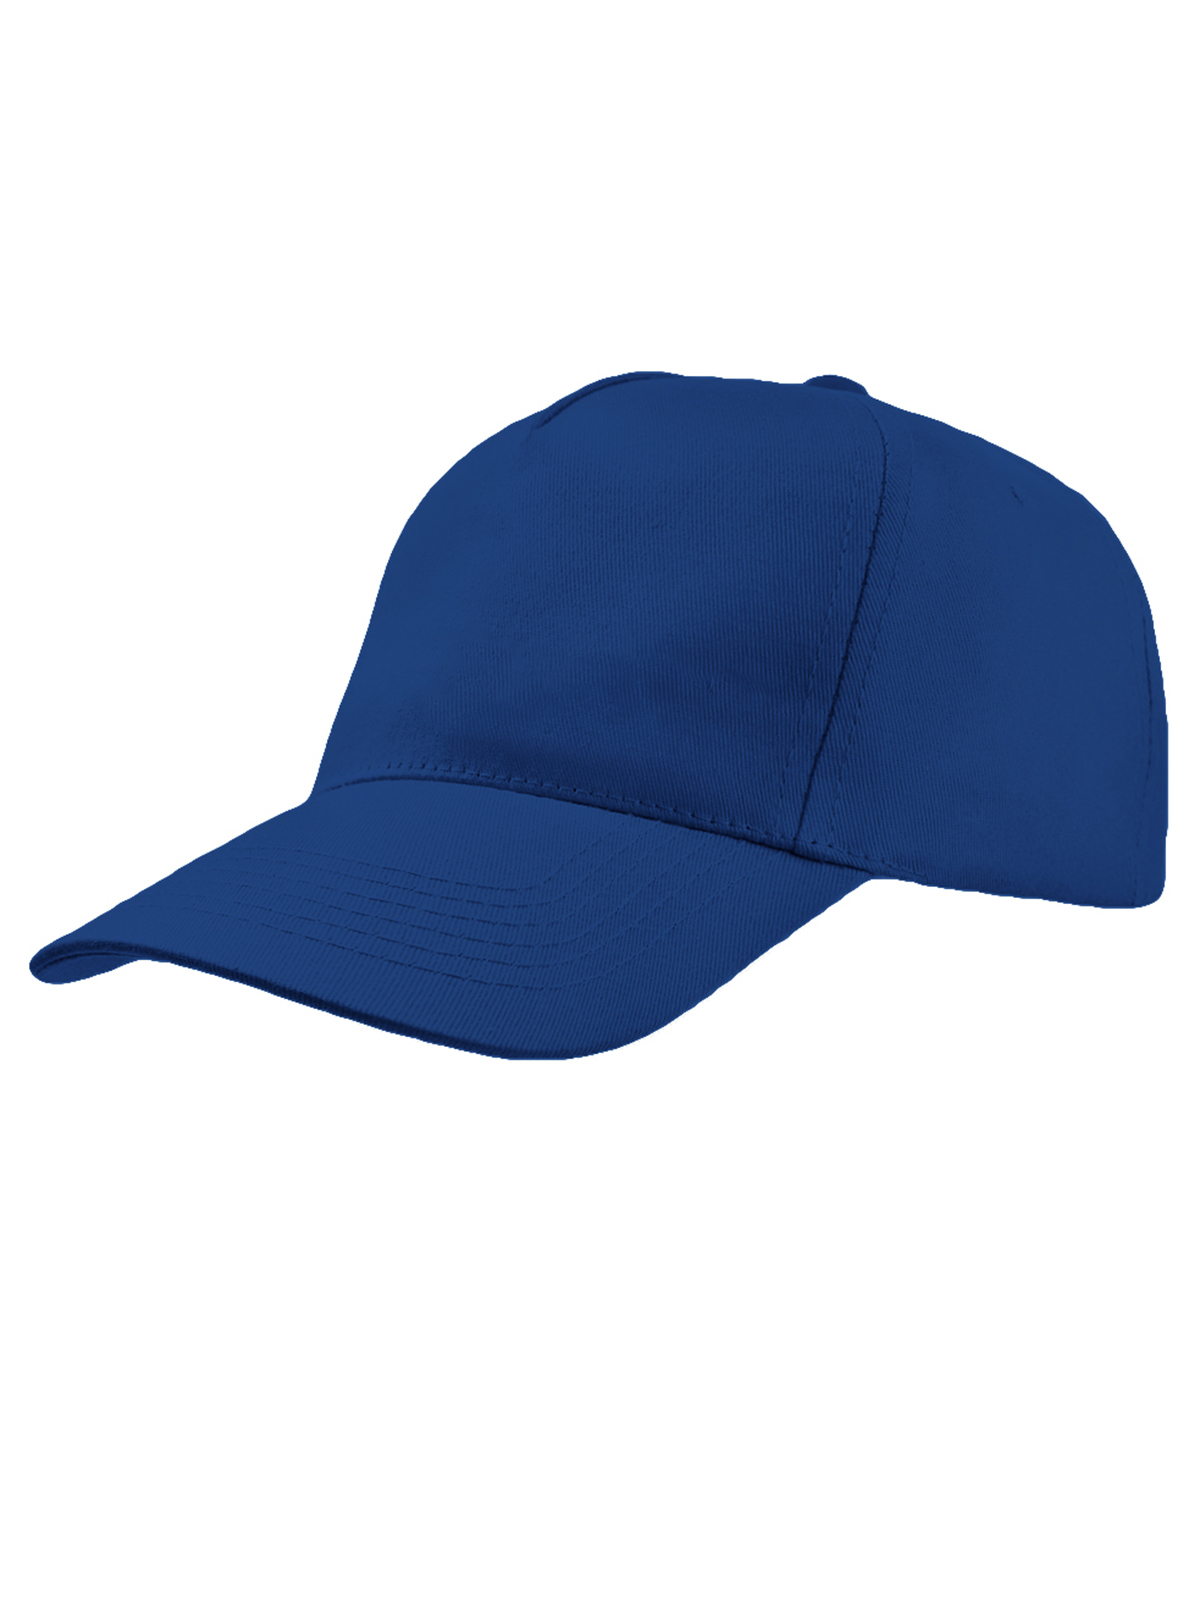 promo-cap-royal-blue.webp